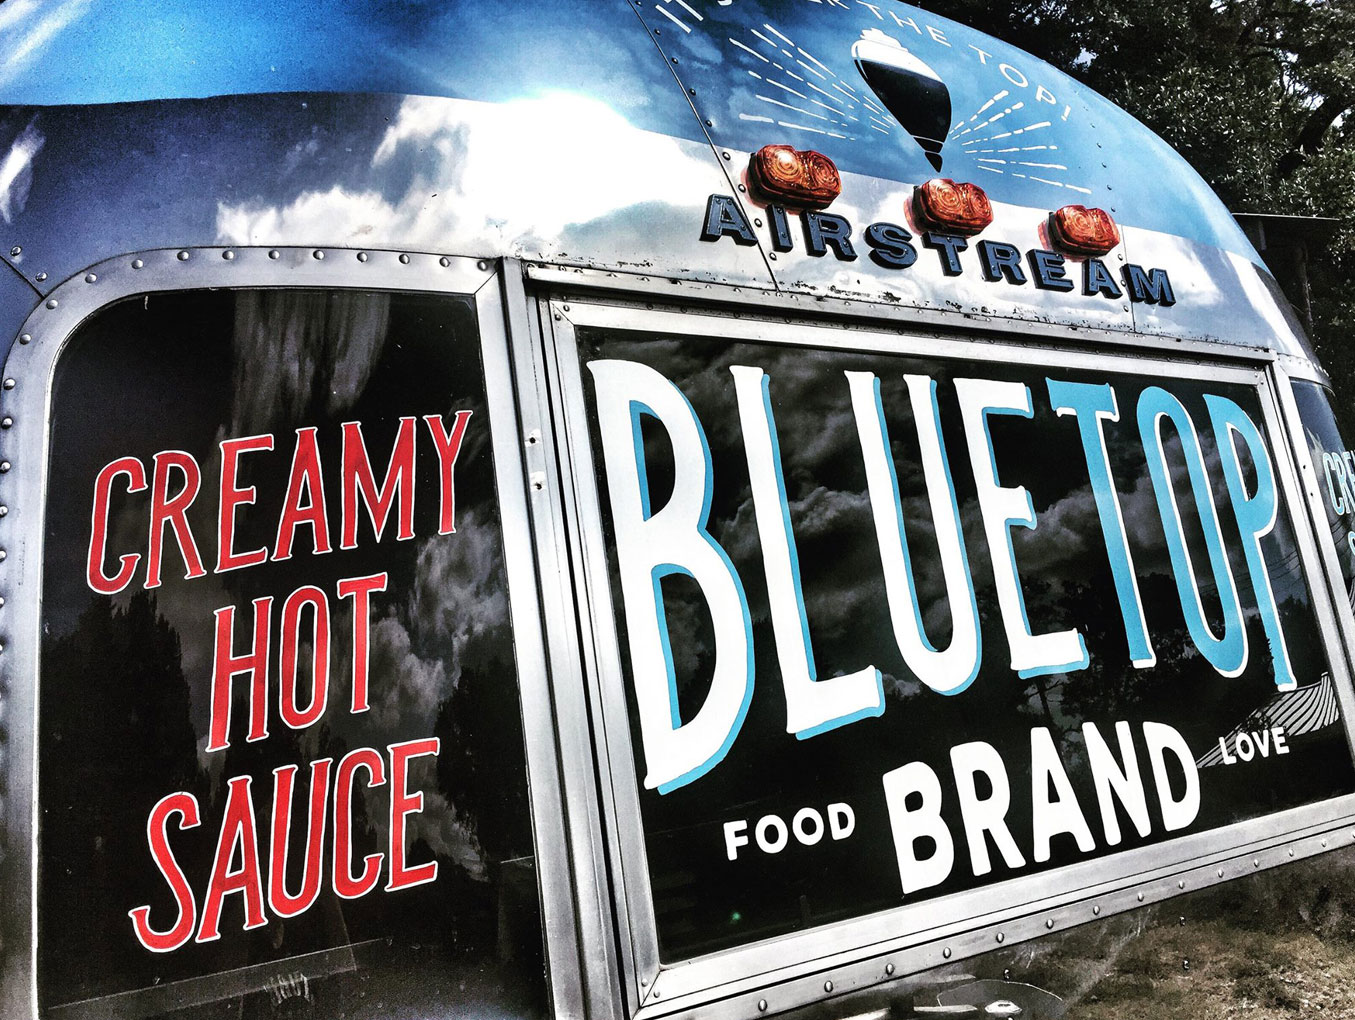 Blue Top Brand hot sauce vending trailer